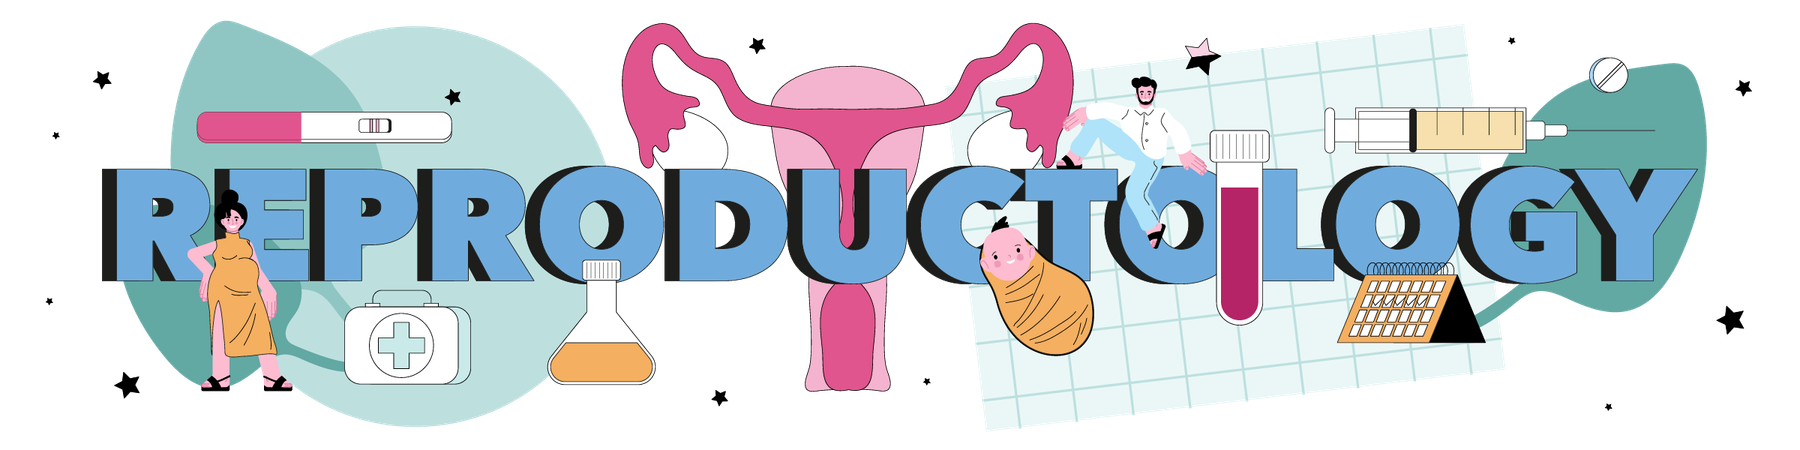 Pregnancy monitoring and medical diagnosis  Illustration